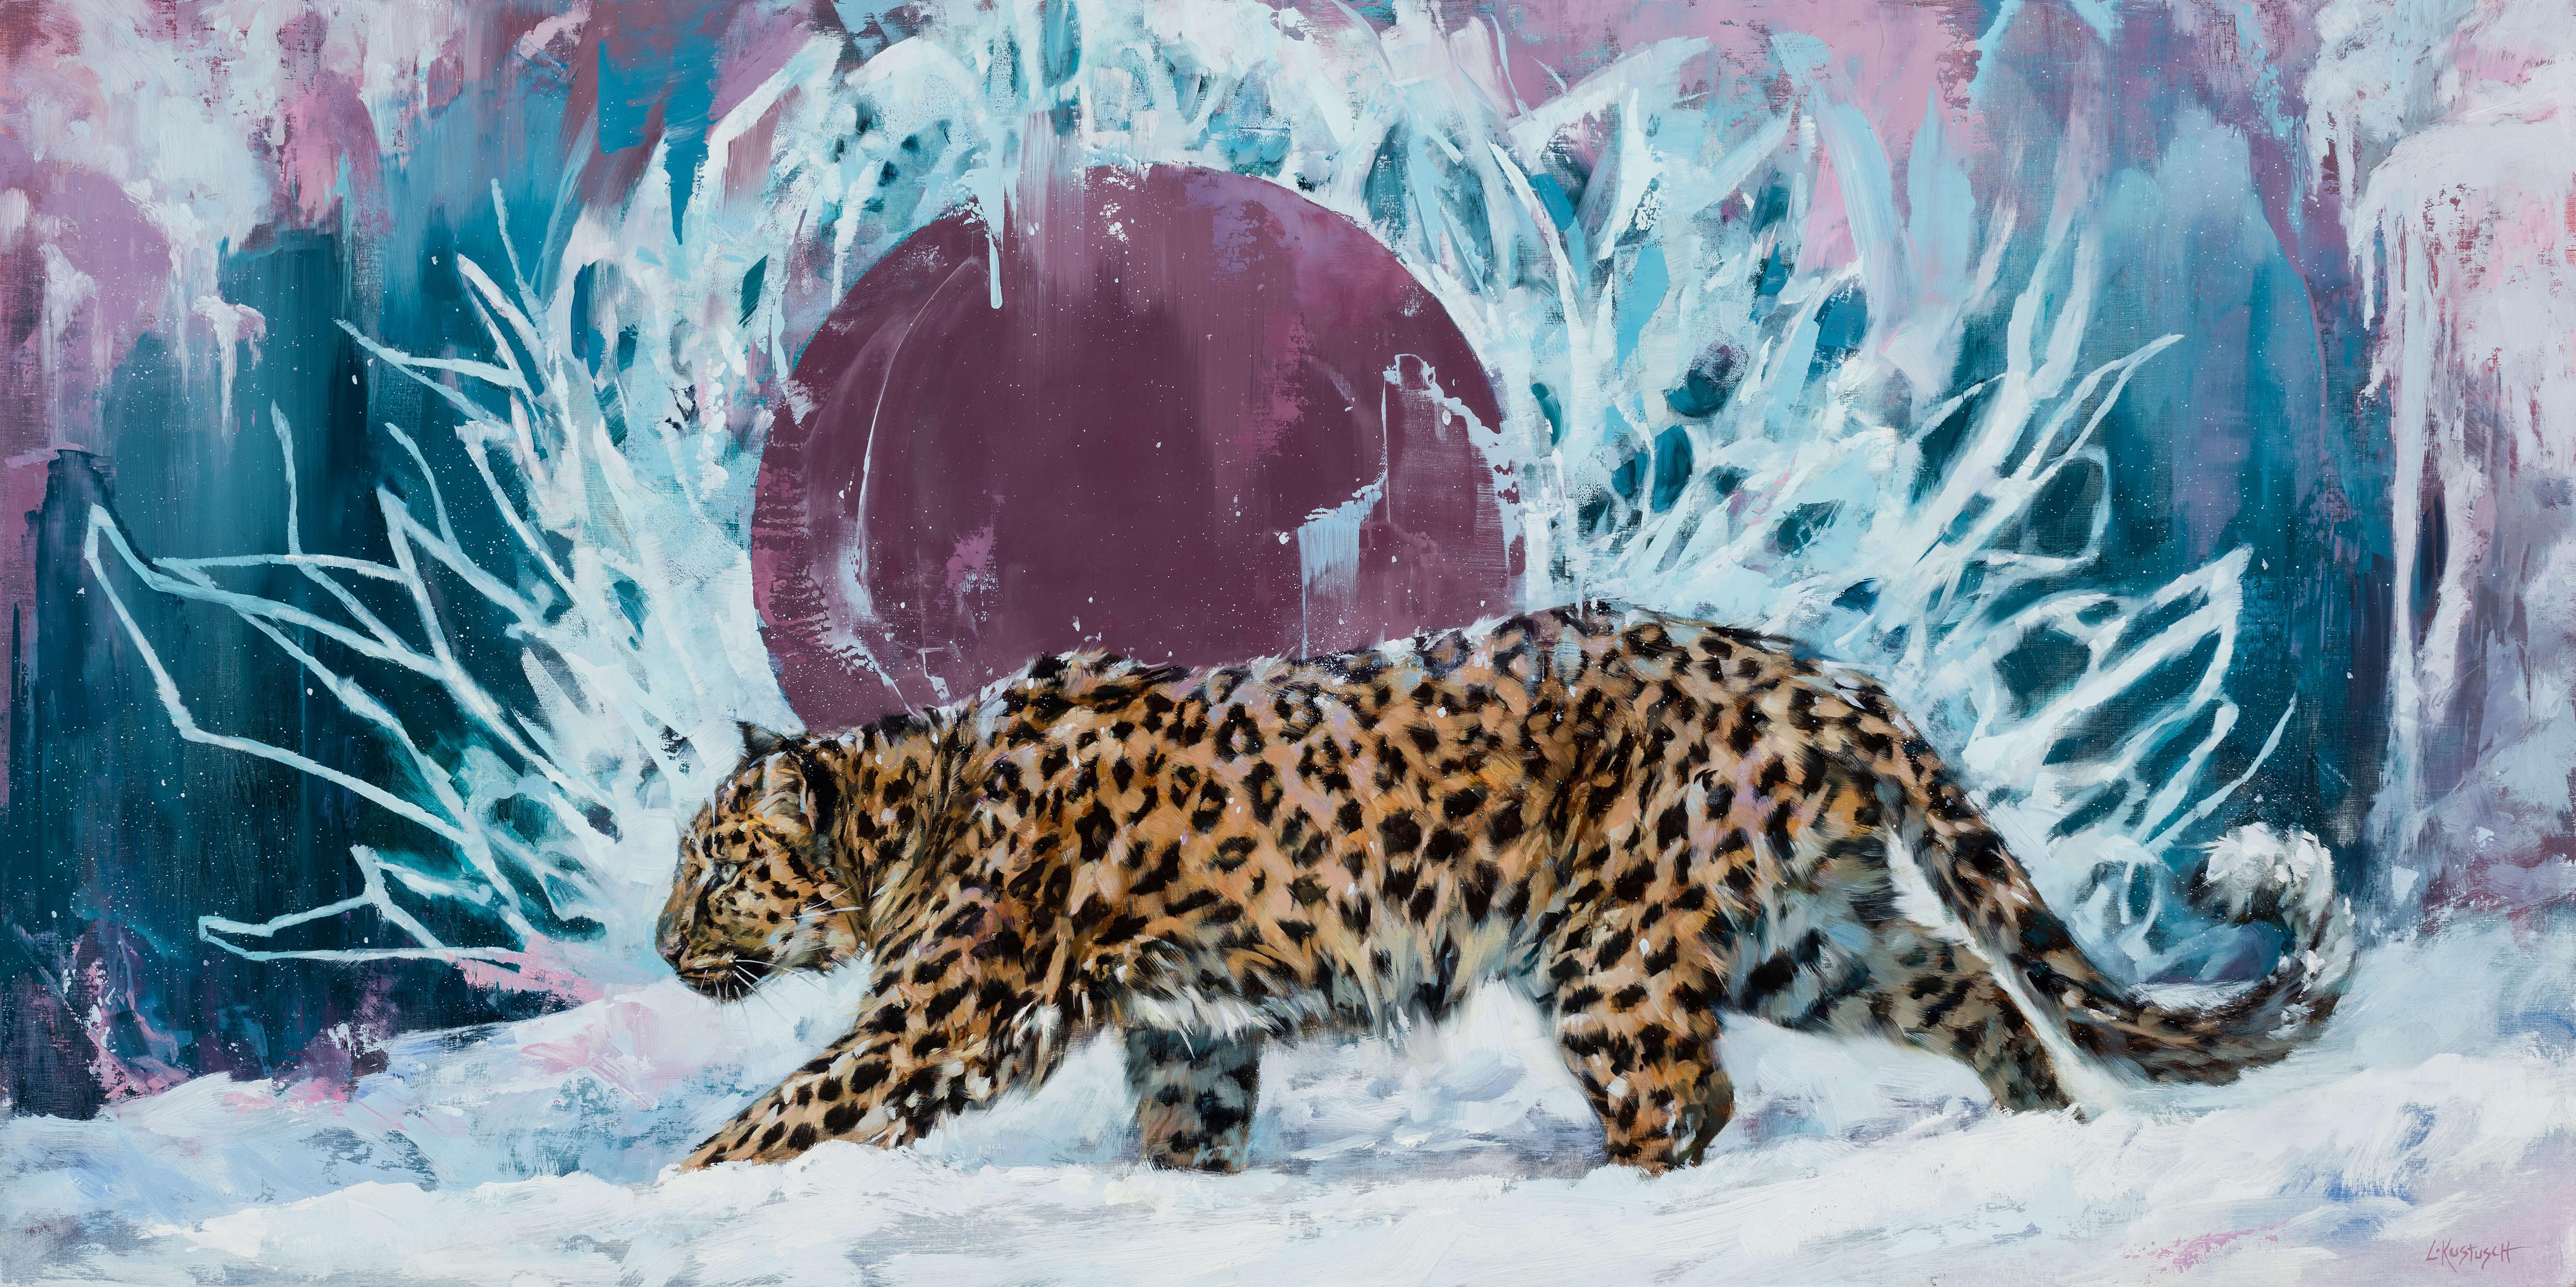 Lindsey Kustusch Figurative Painting - "The Amur Leopard" - Endangered Big Cat Oil Painting